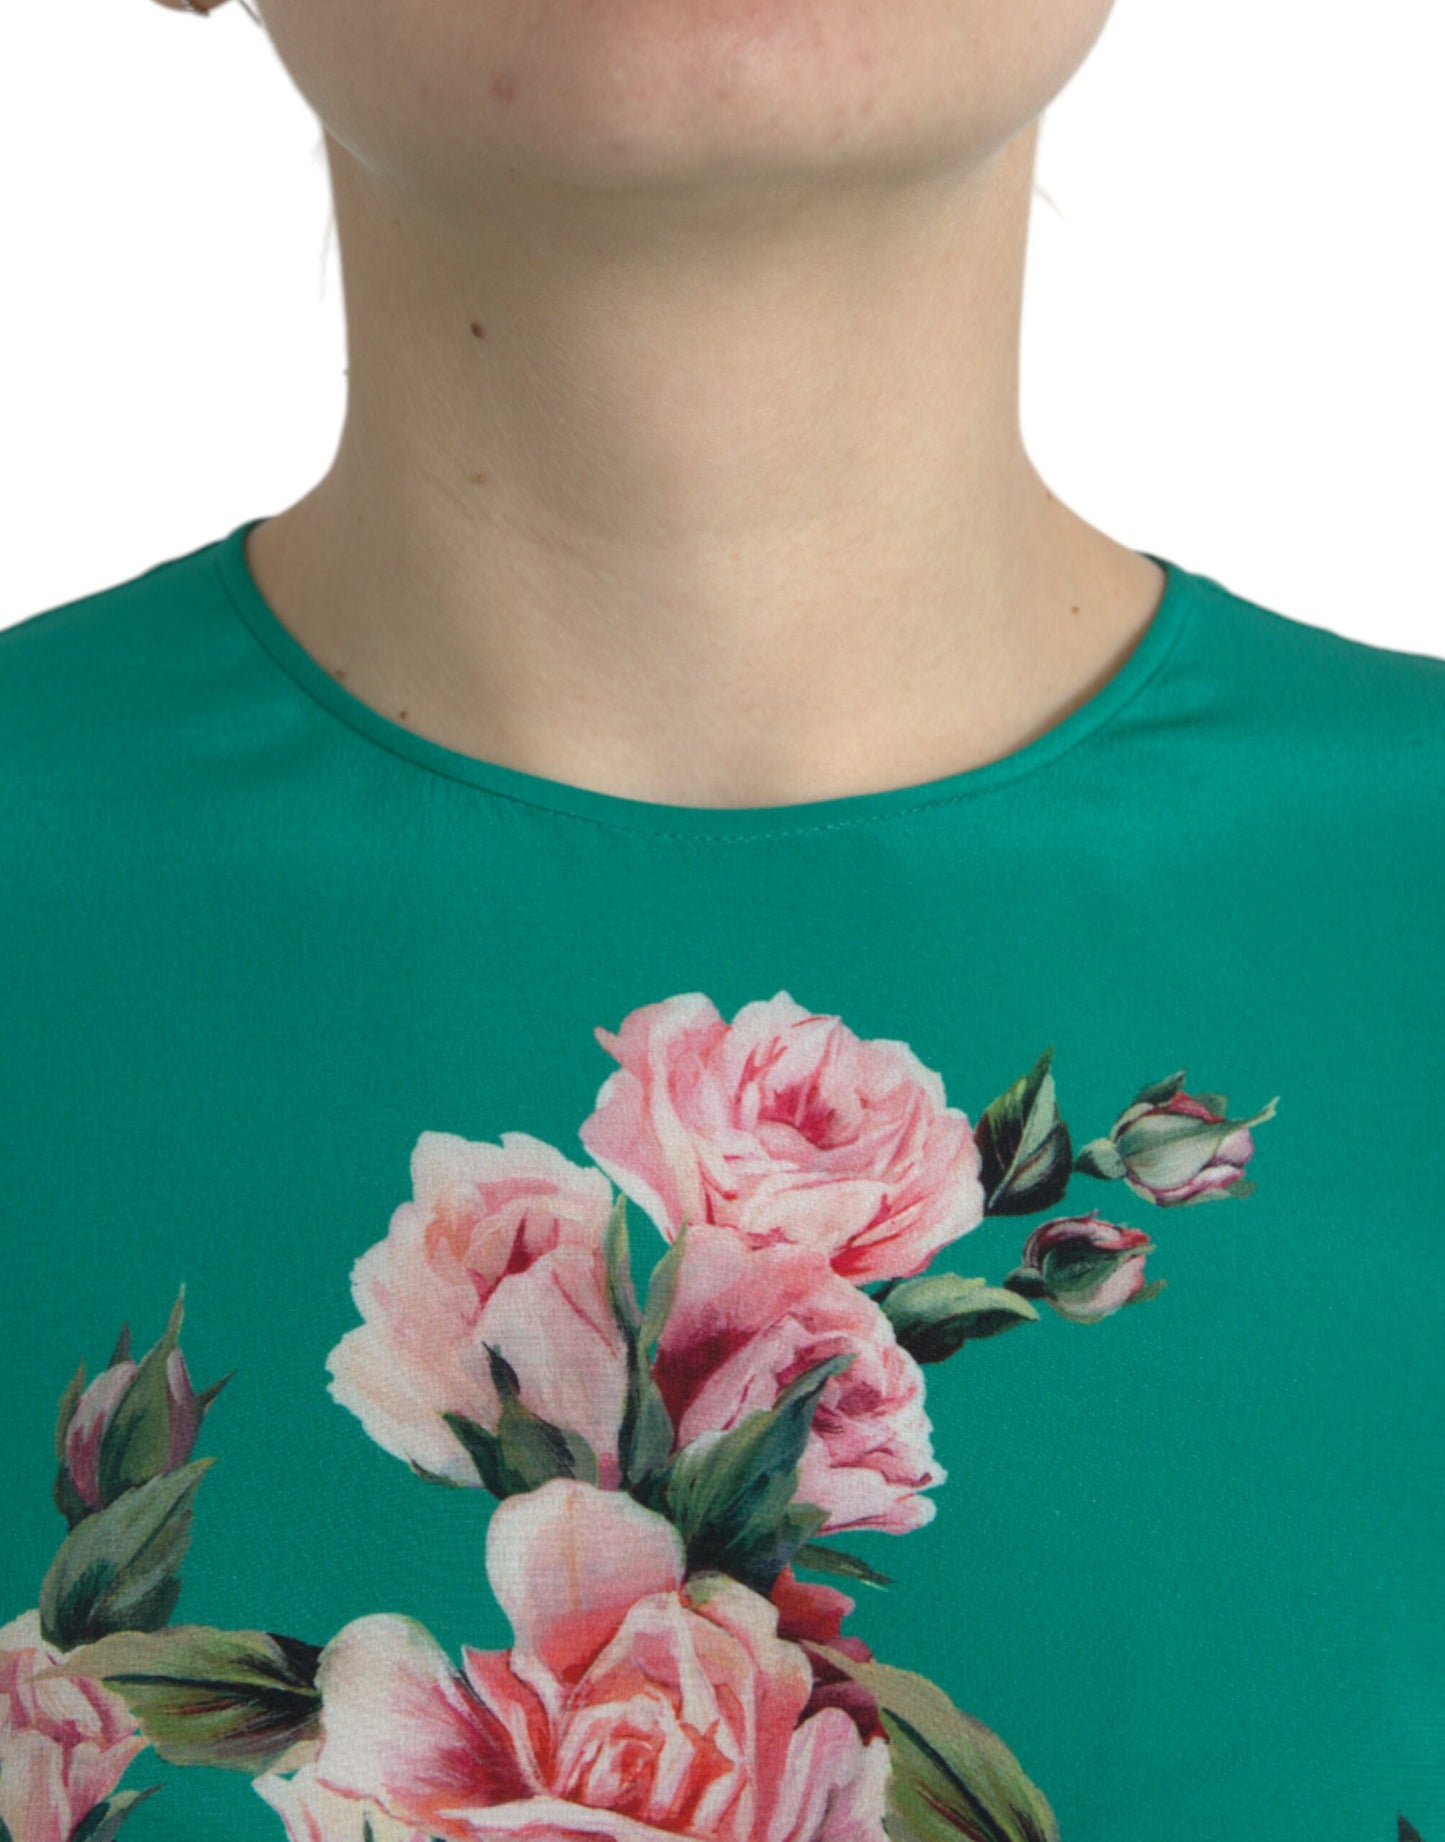 Dolce & Gabbana Elegant Silk Sleeveless Floral Cat Tank Top